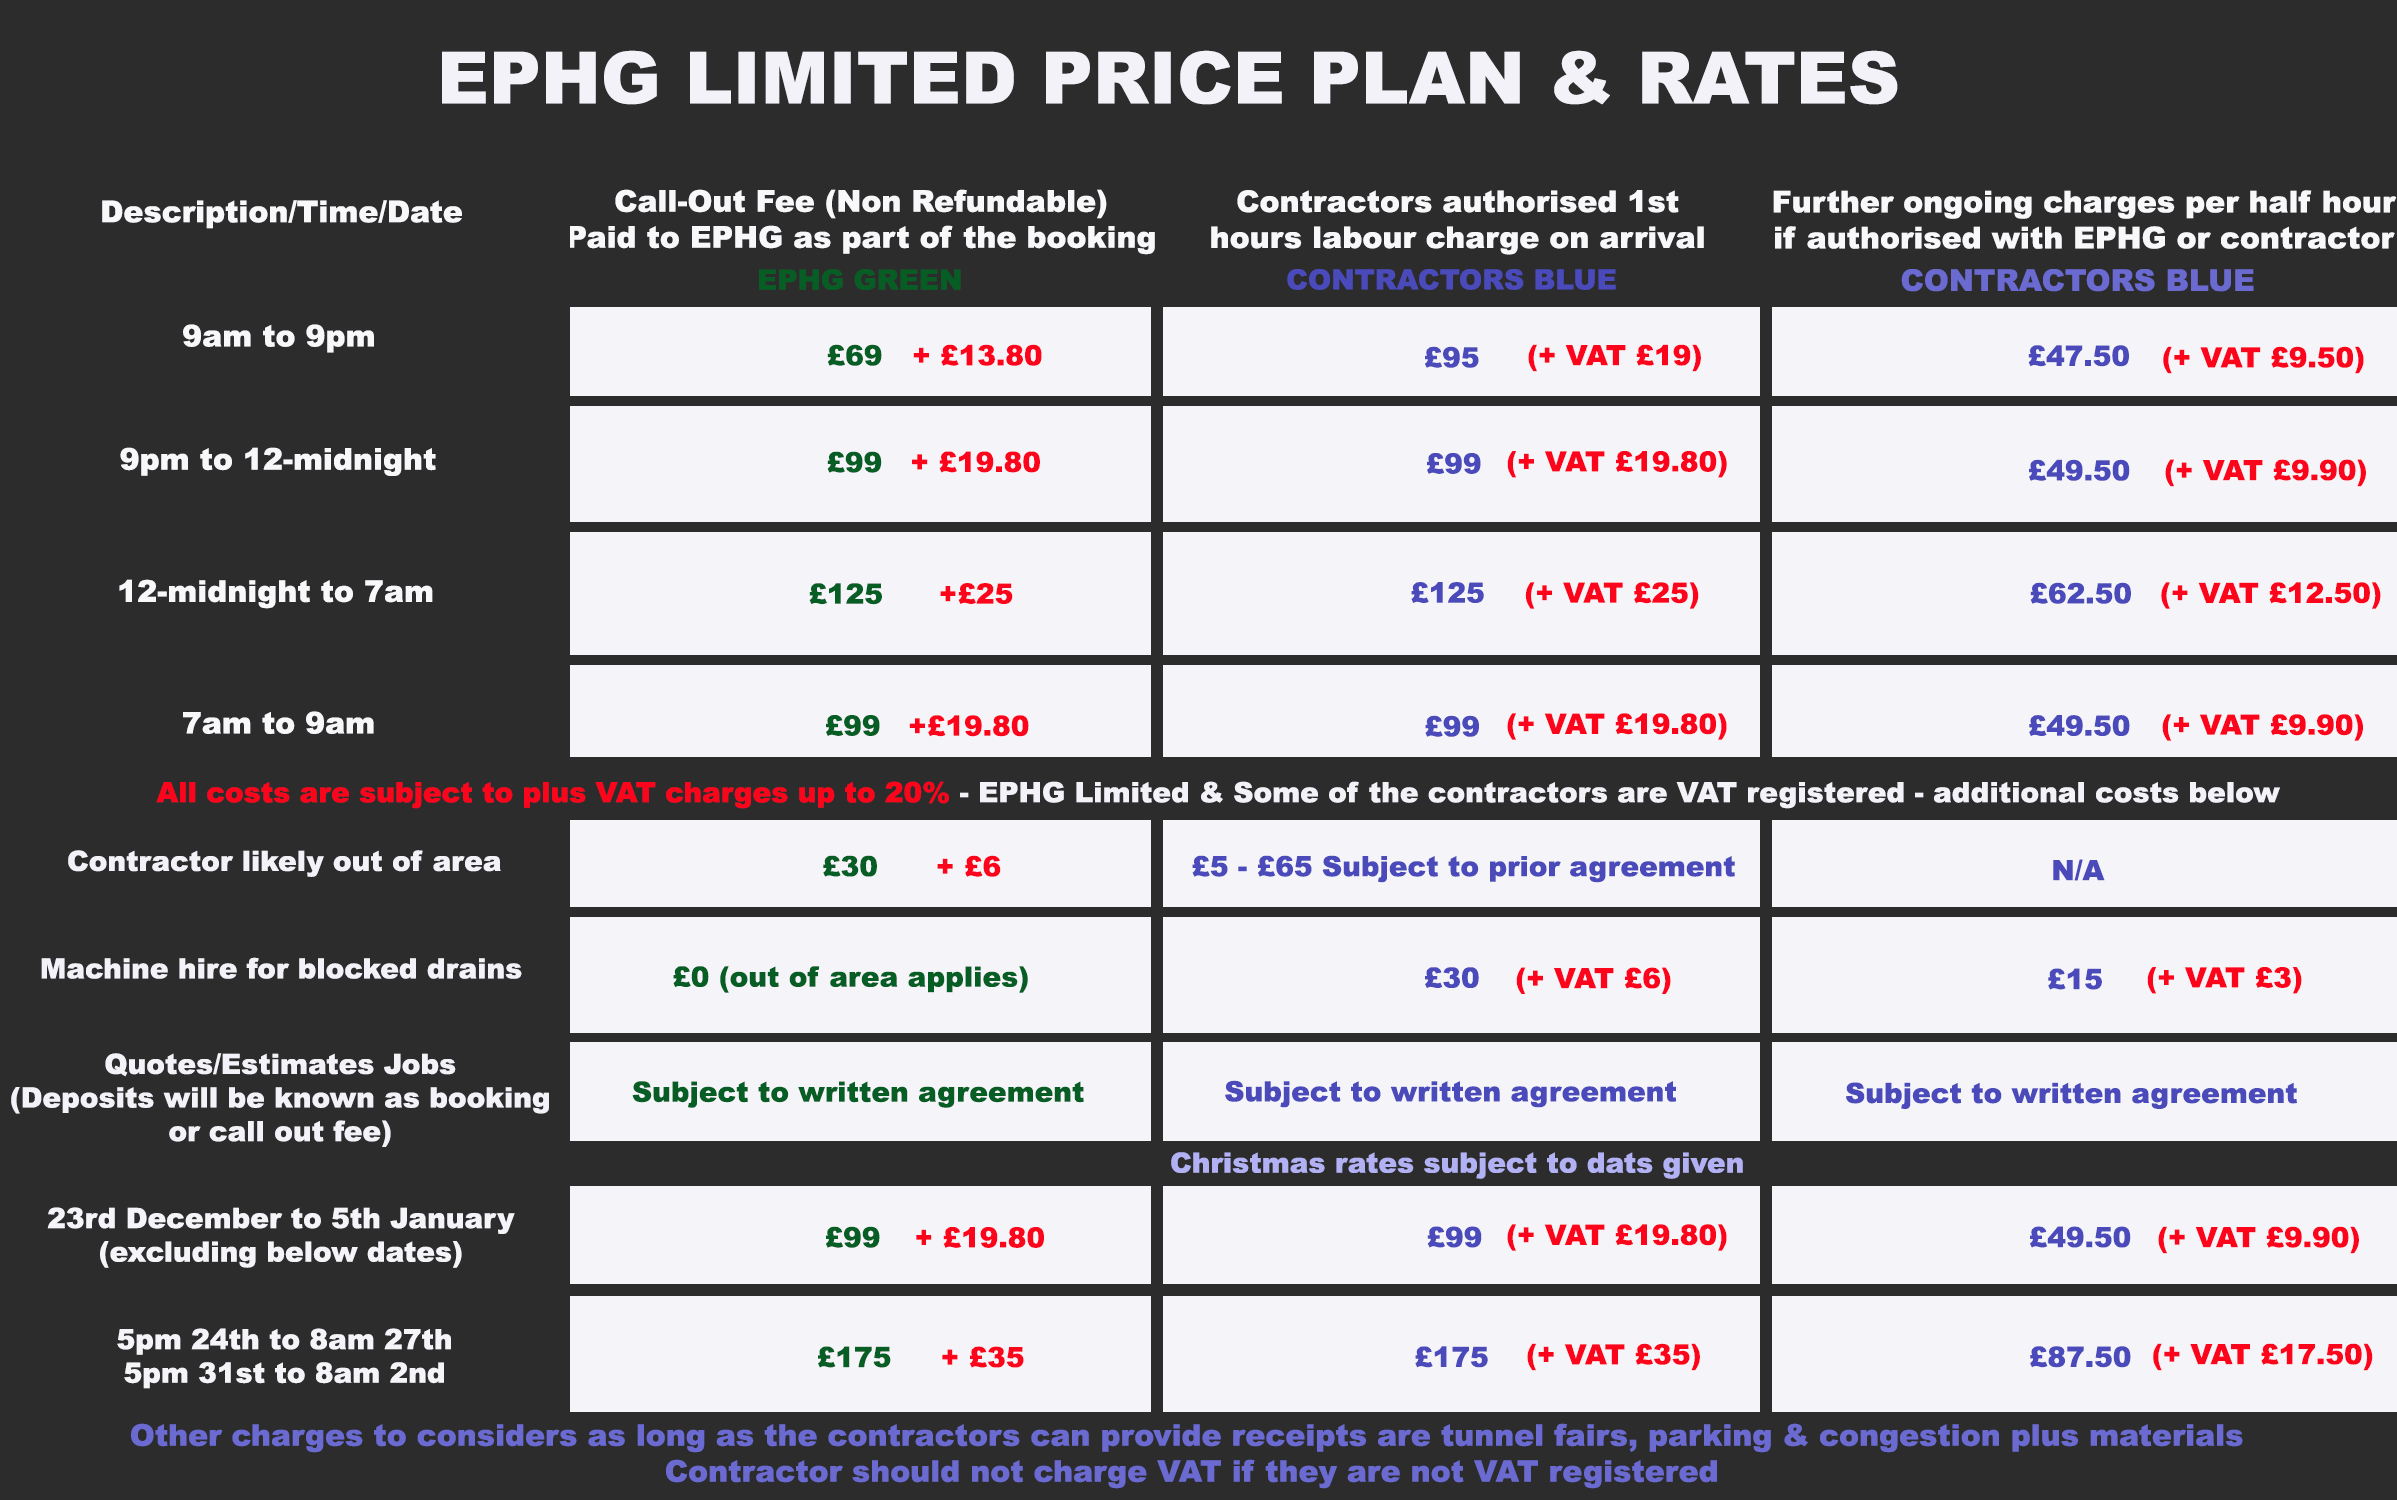 EPHG rates and price plan 2020